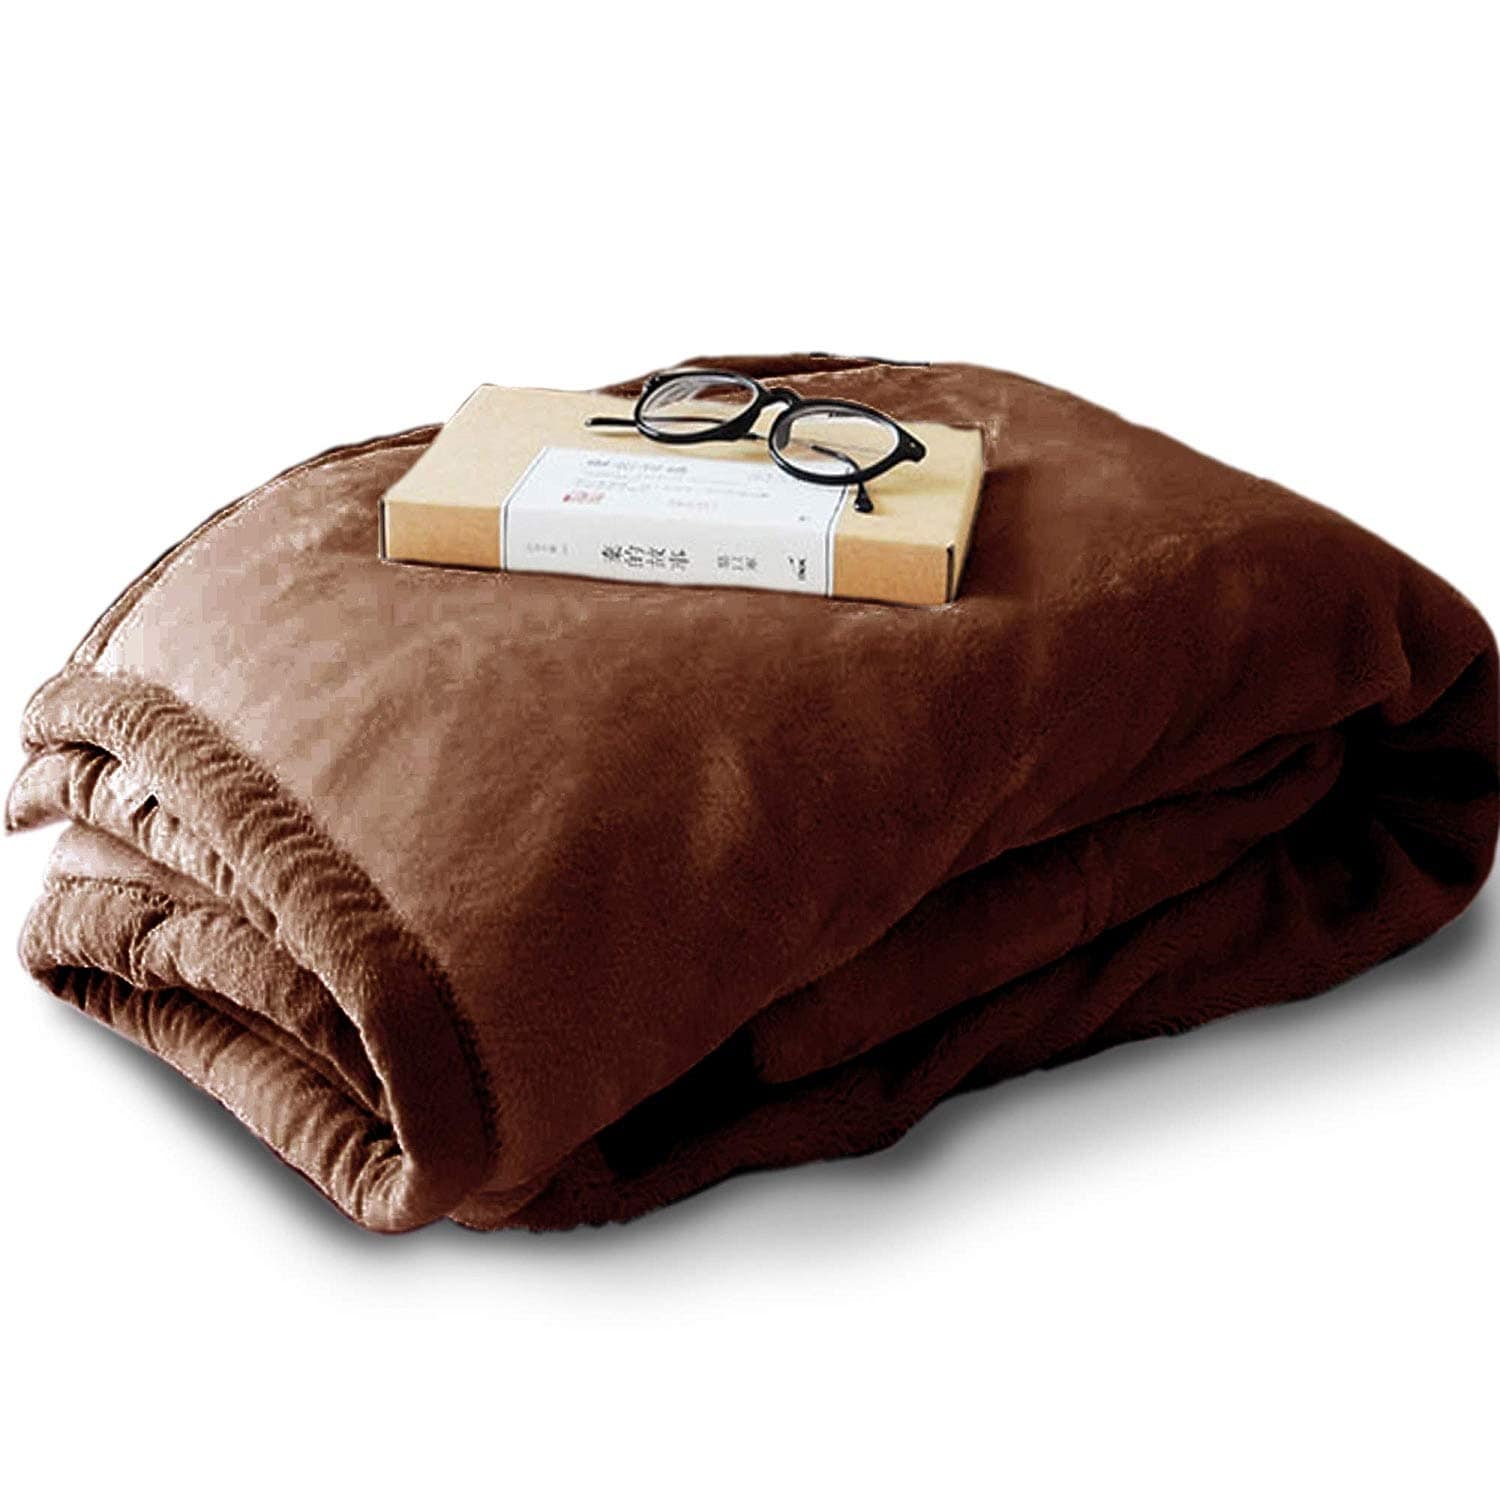 Kasentex Plush Fleece Thermal Blanket Throw Blanket Overstock 27586692